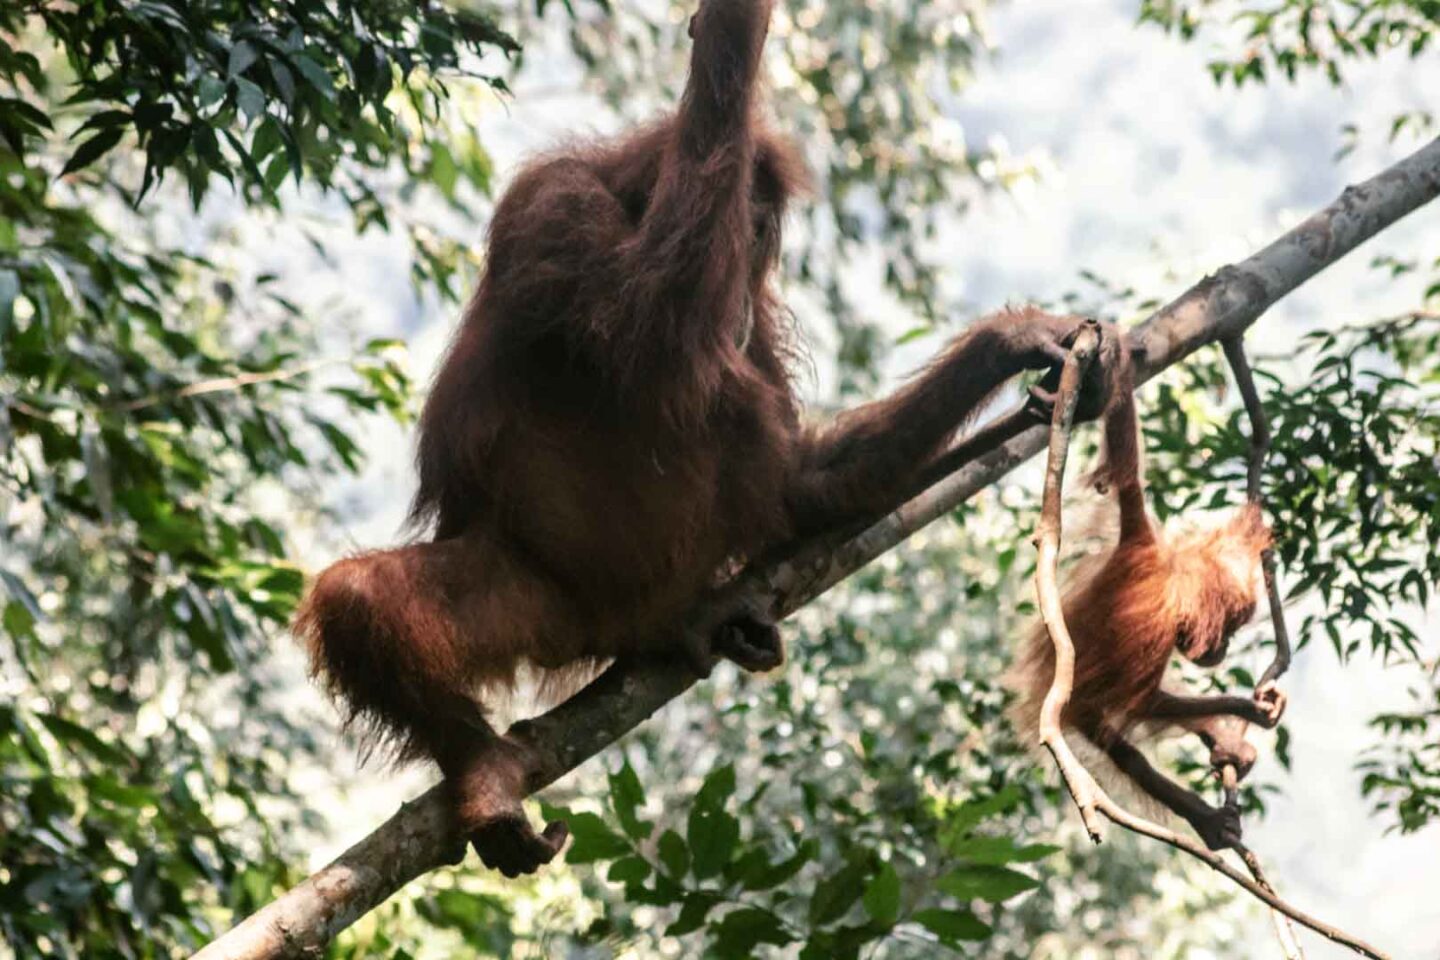 Mother and baby orangutan in Gunung Leuser National Park